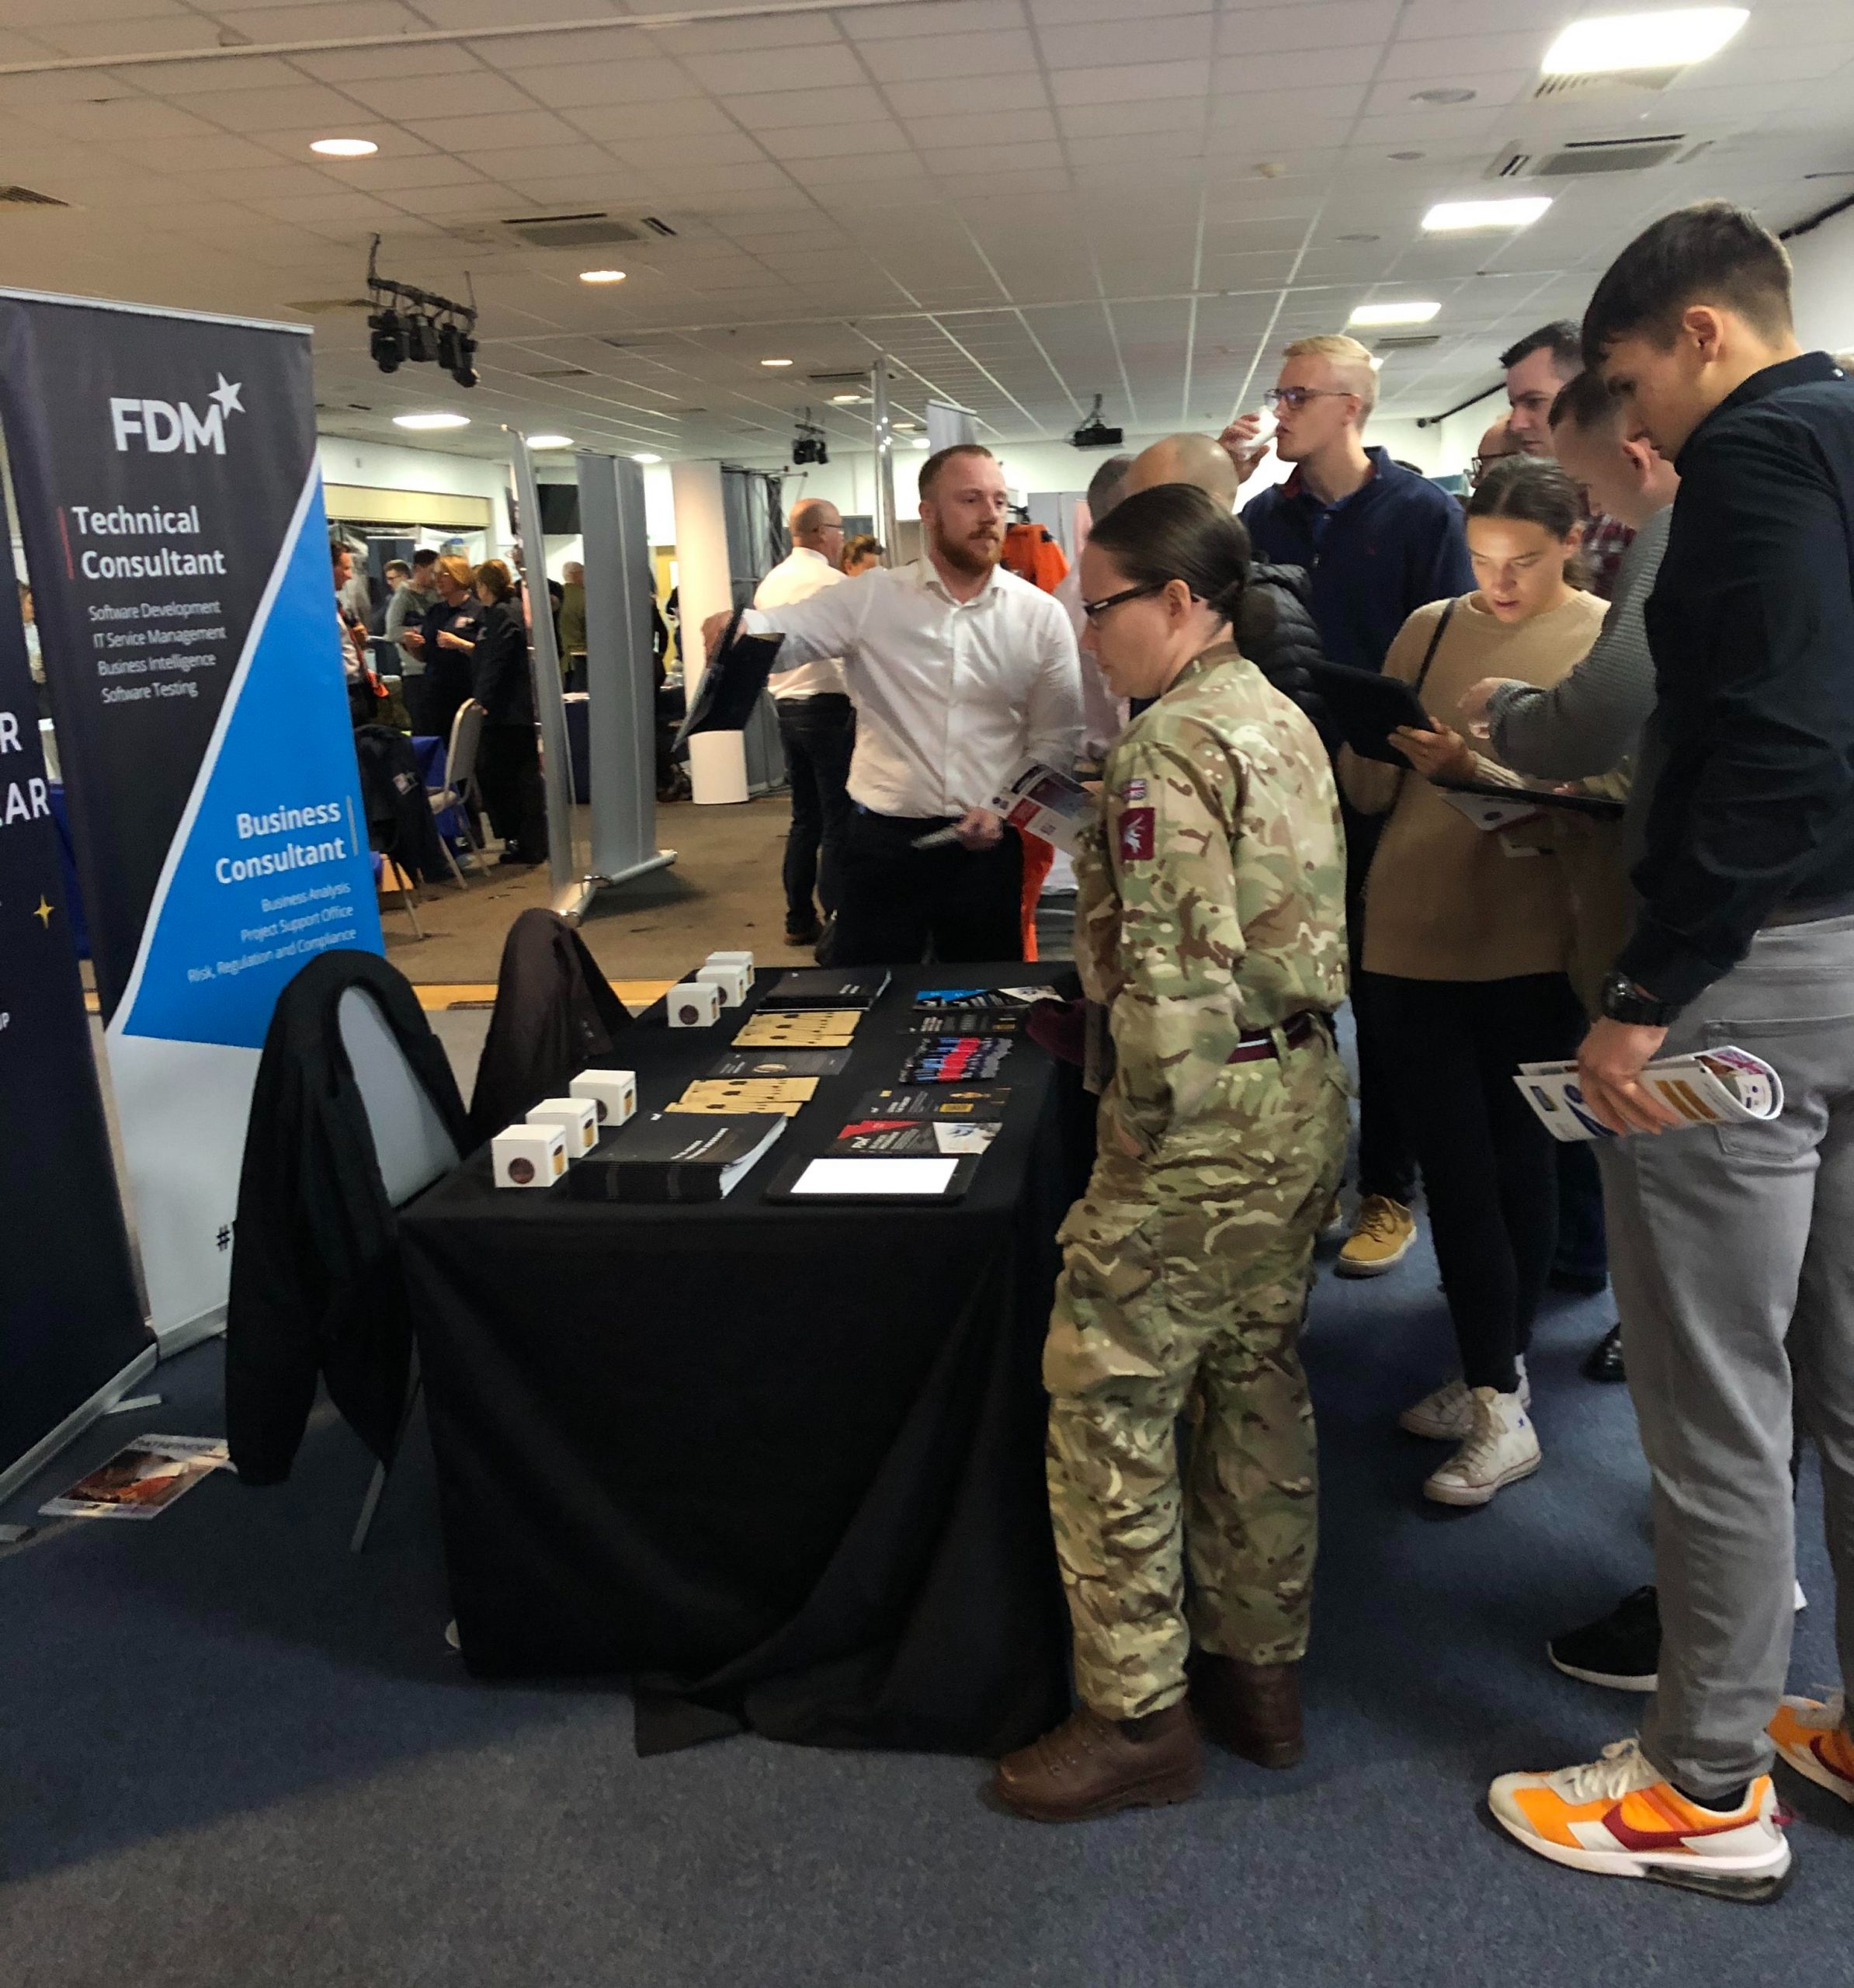 Armed Forces & Veterans Expo London – Meet The Exhibitors – The FDM Ex-Forces Programme